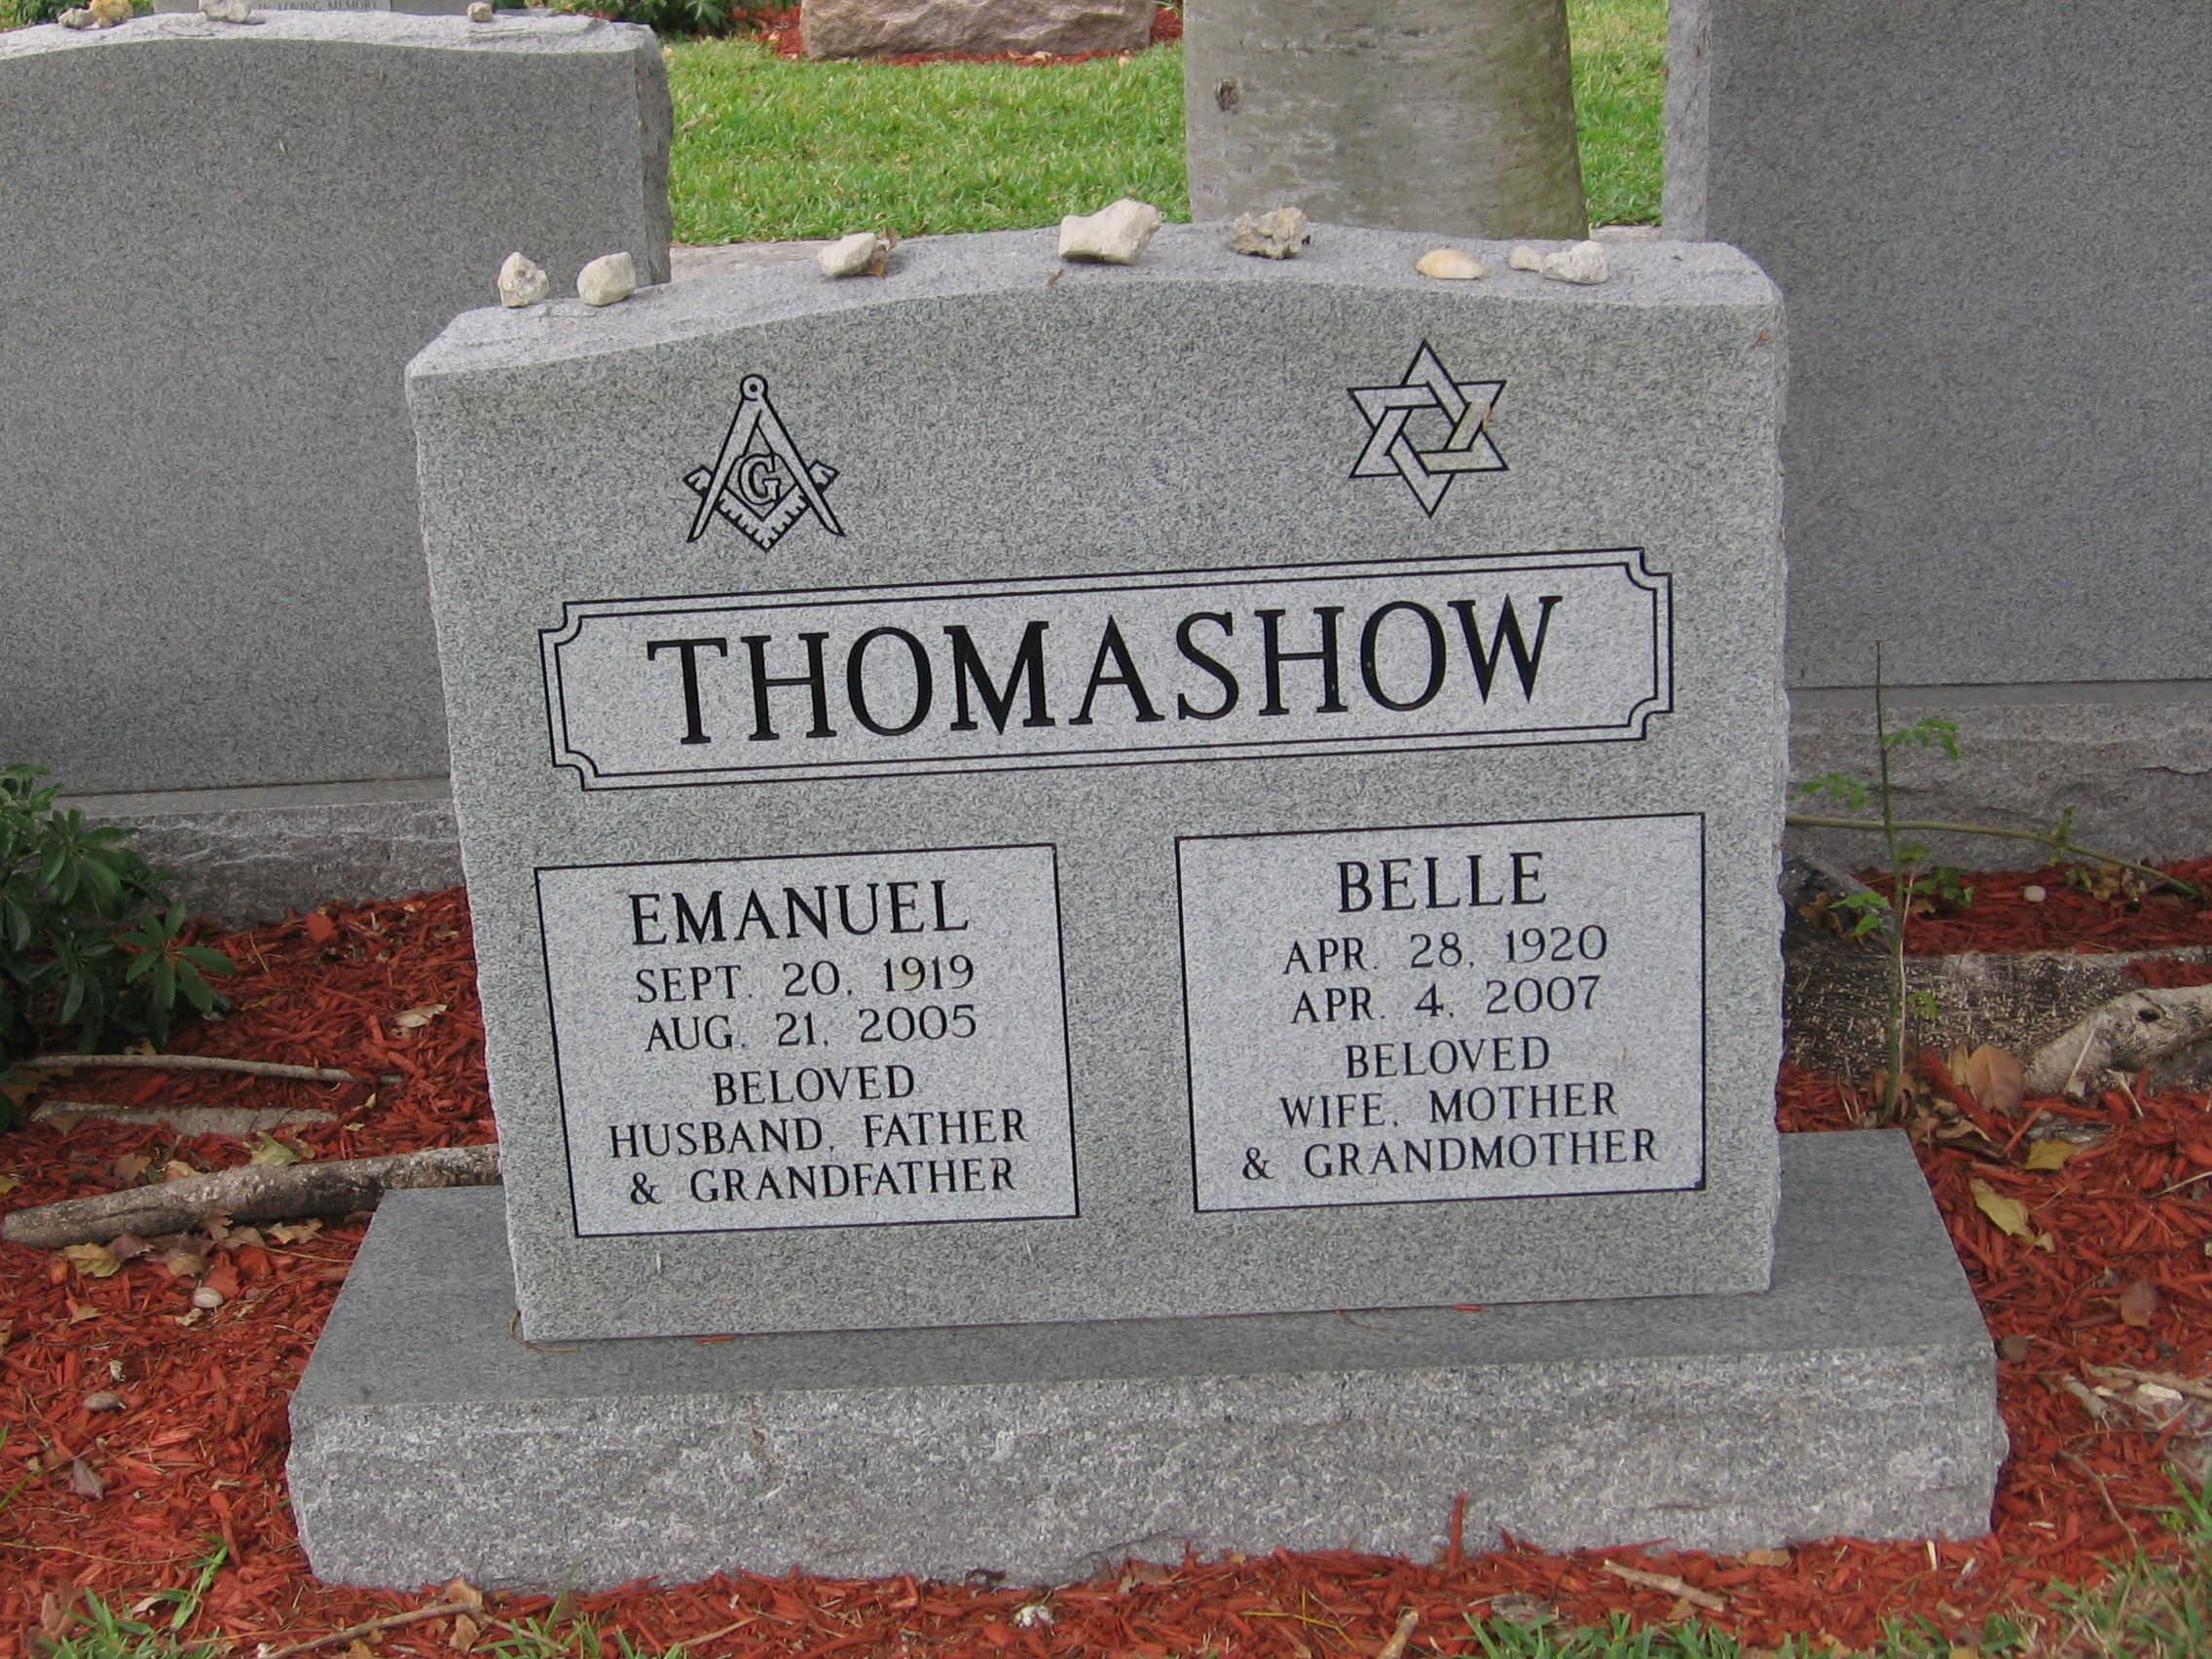 Emanuel Thomashow